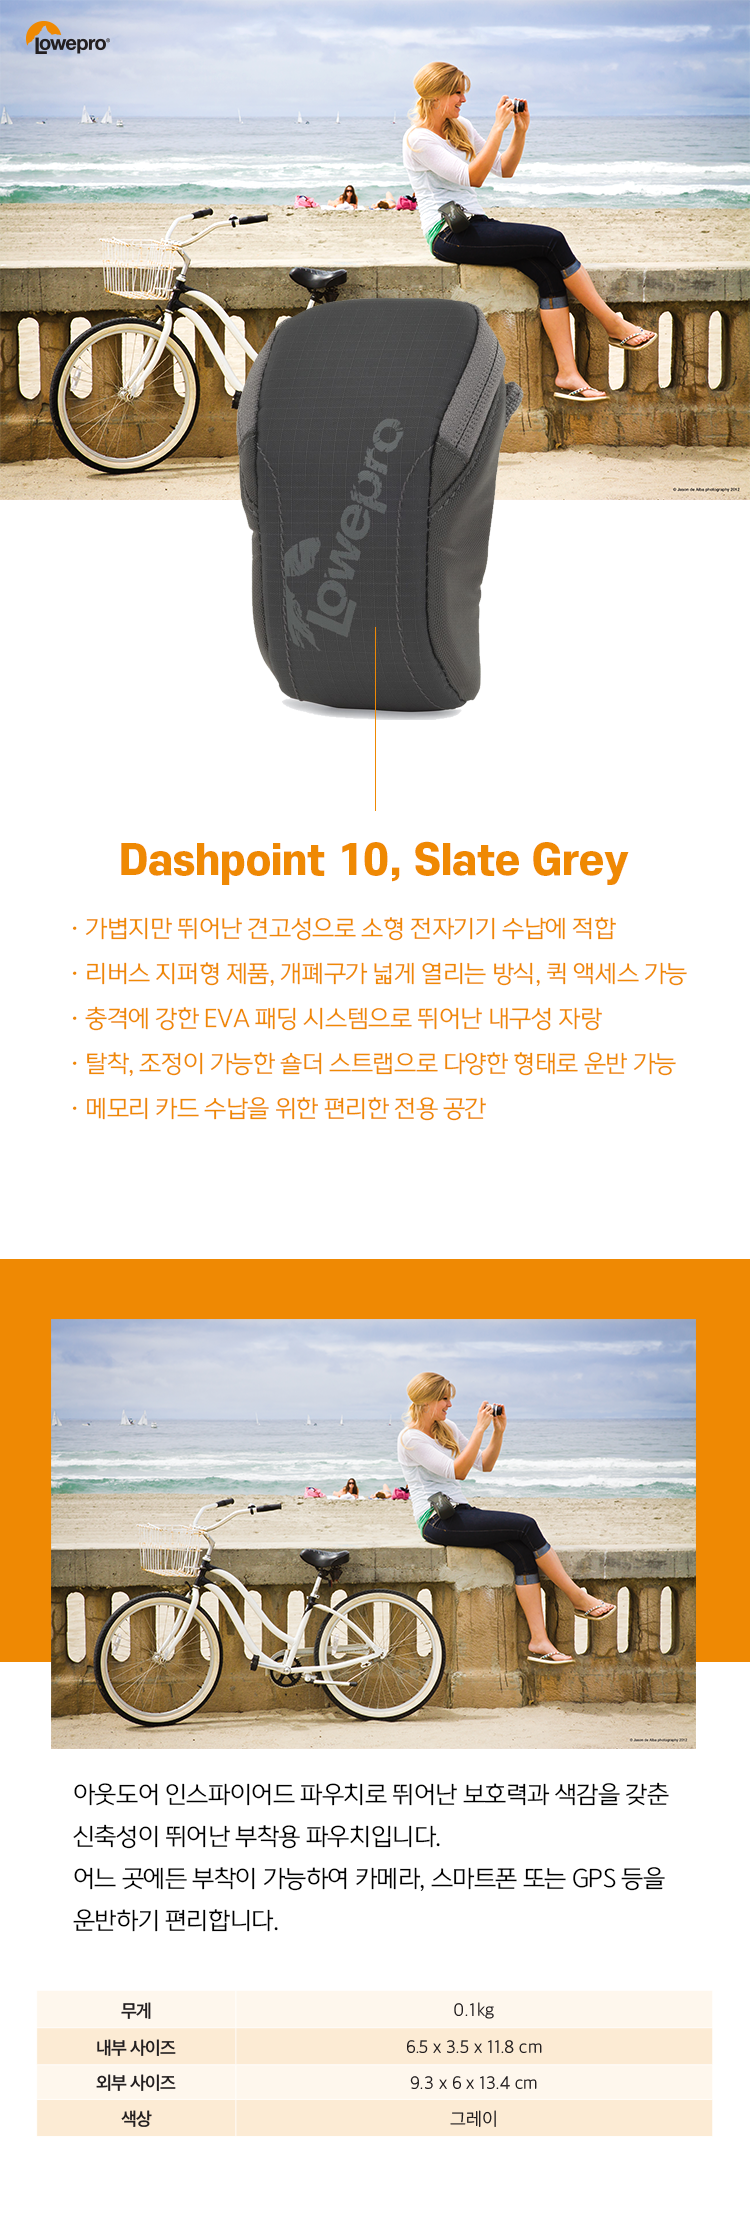 Dashpoint 10, Slate Grey